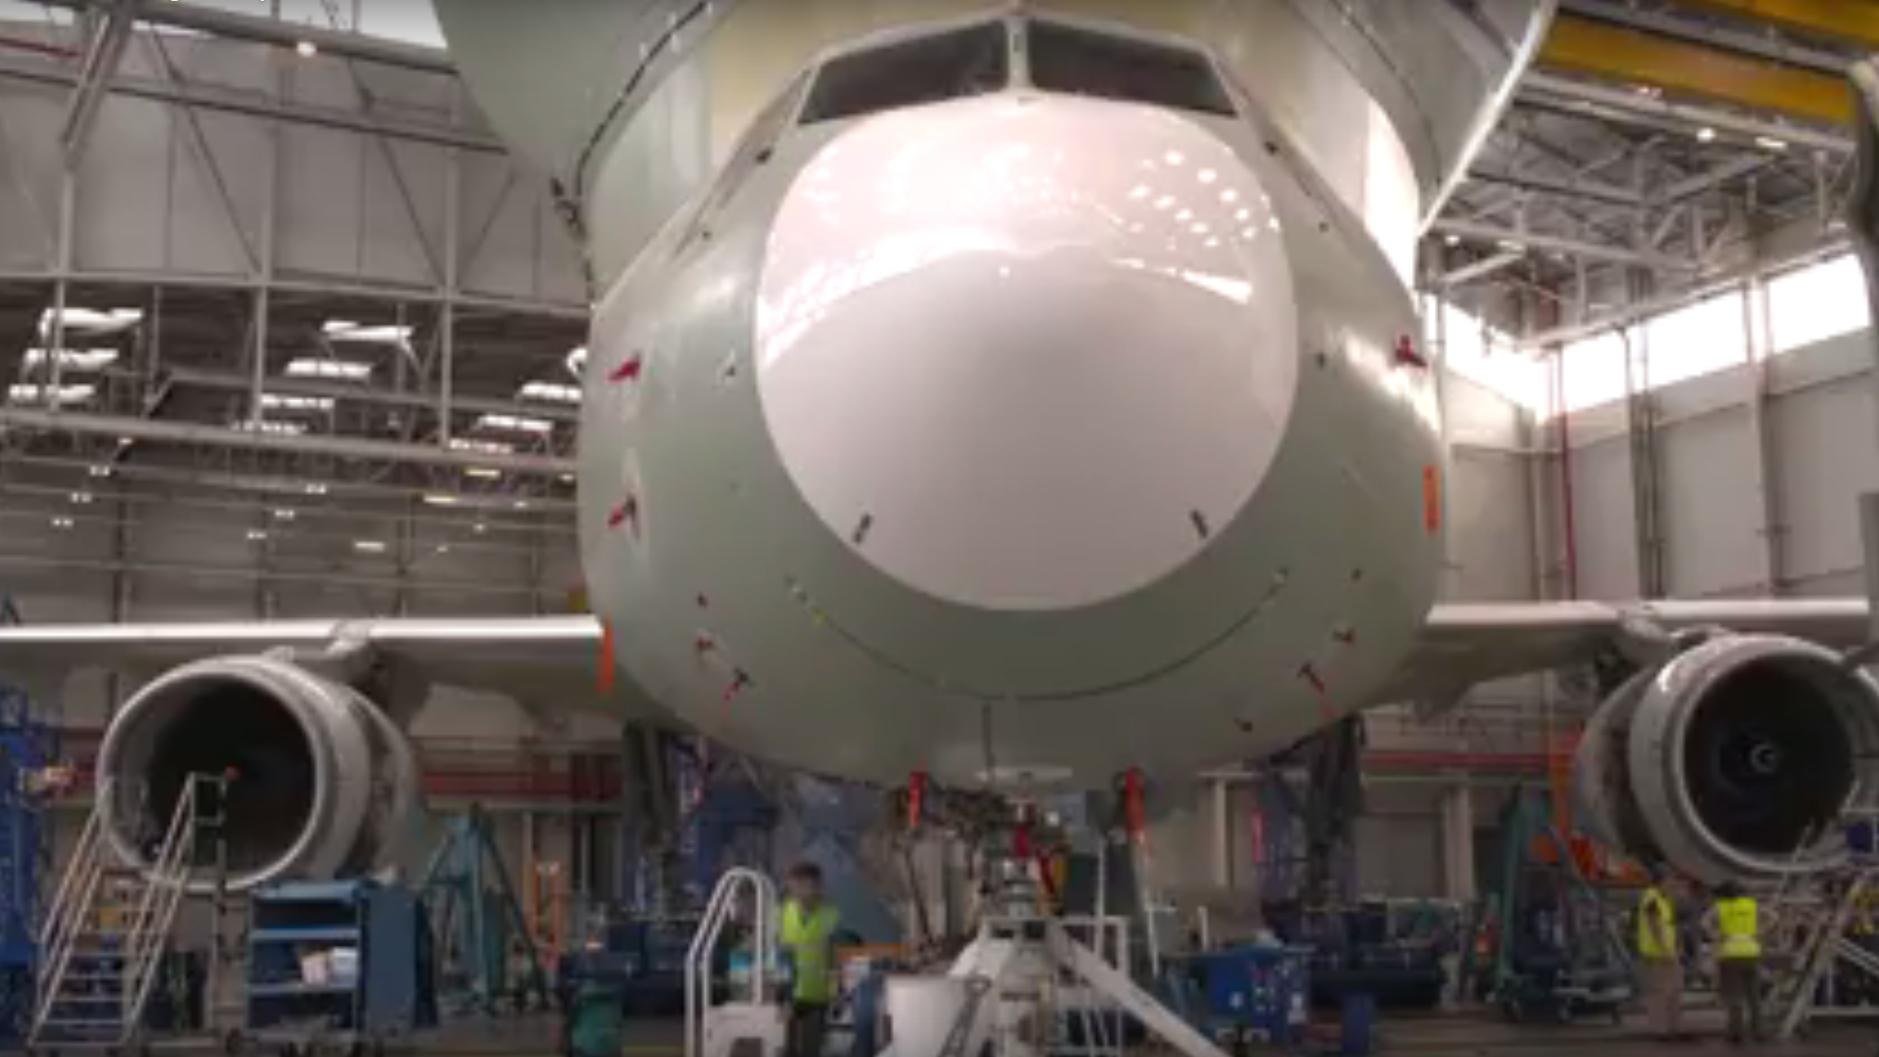 Standbild - Video: Airbus Beluga XL pruebas vibracion GTV Ground Vibration Test